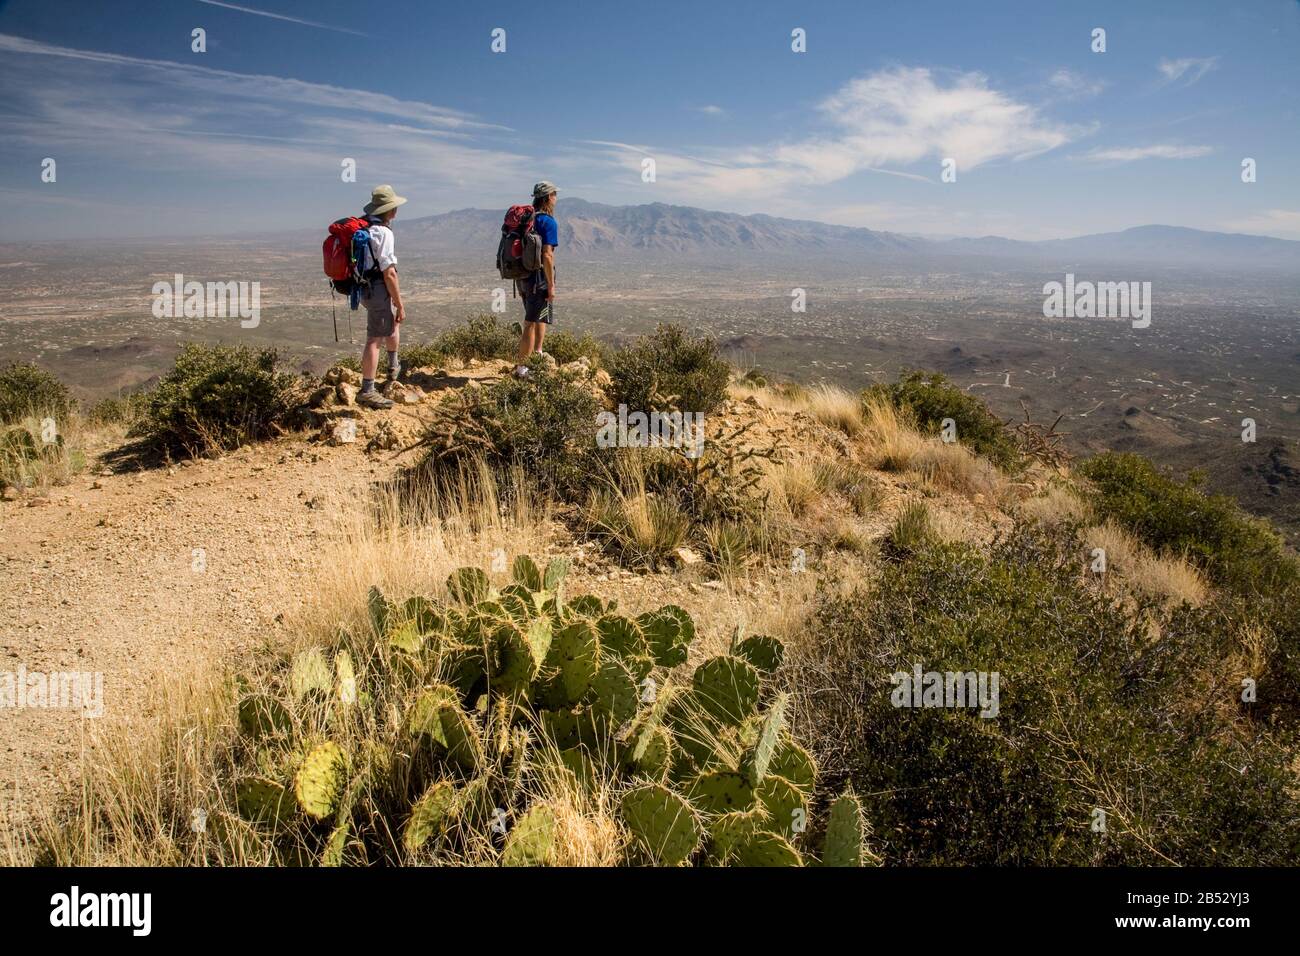 AZ00036-00...ARIZONA - Hikers on the summit of Wasson Peak in Saguaro National Park. Stock Photo